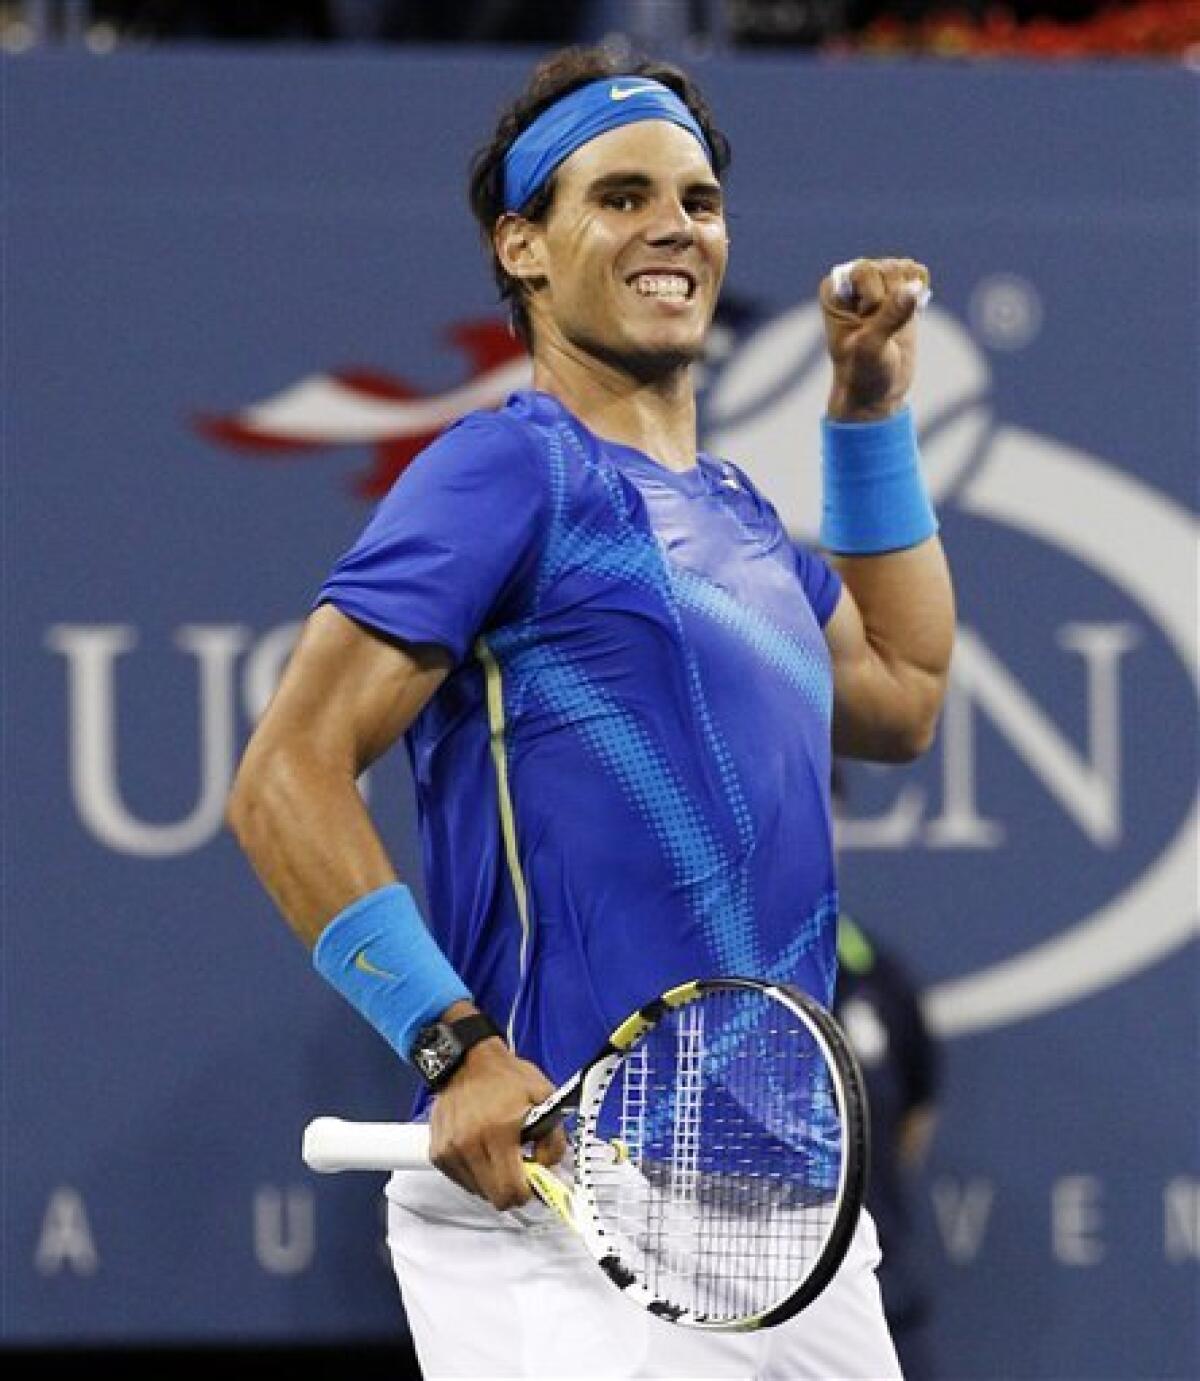 Who has won most men's tennis Grand Slams? Roger Federer, Rafael